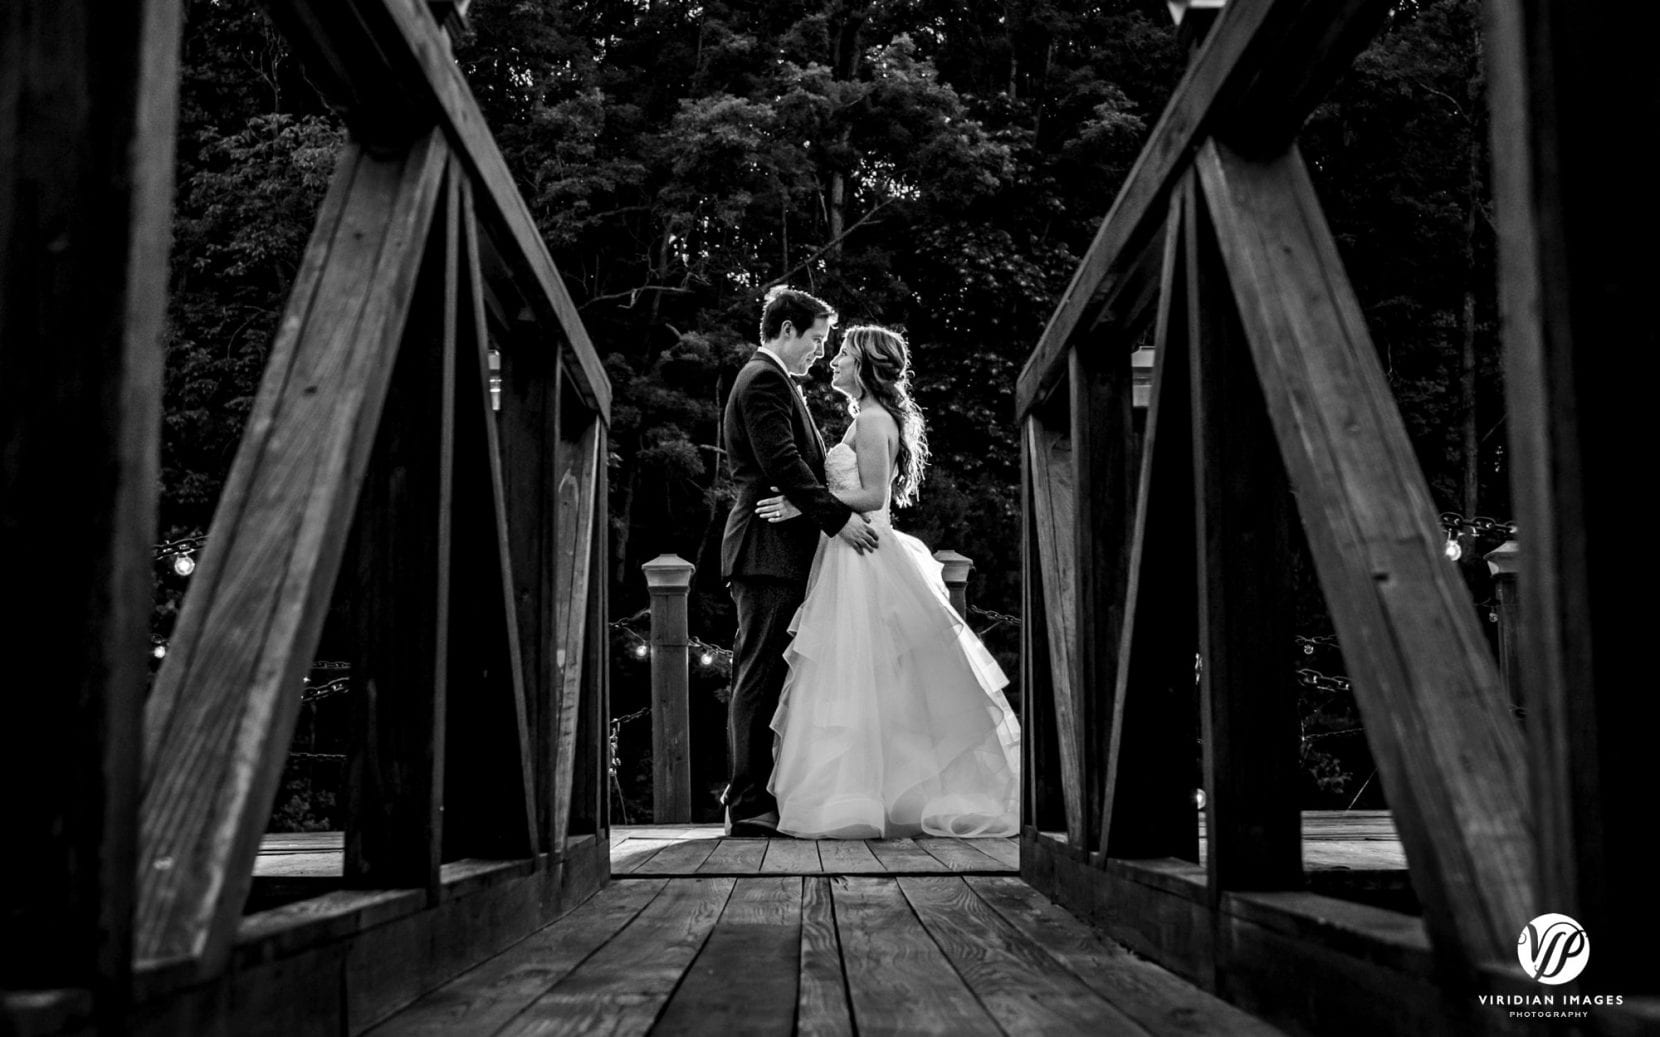 dusk photos with bride and groom on dock